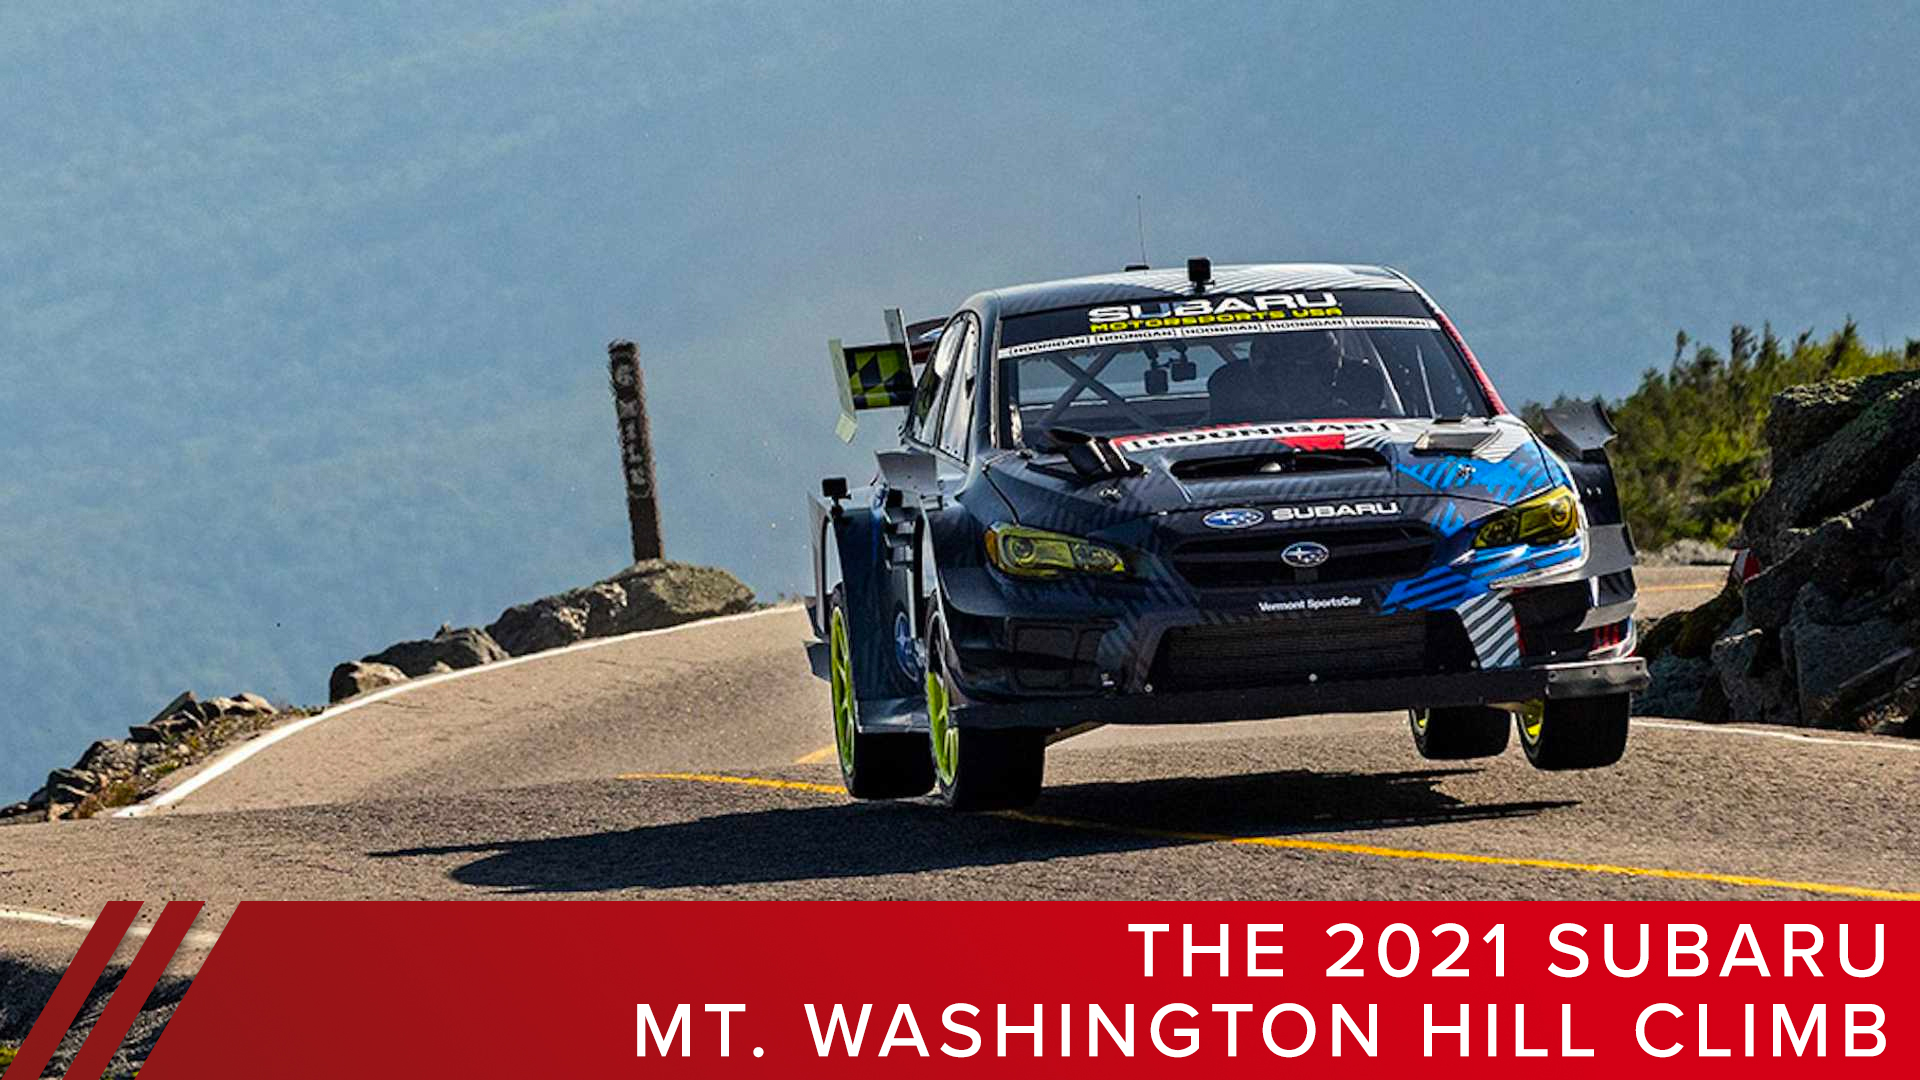 The 2021 Subaru Mt. Washington Hill Climb 